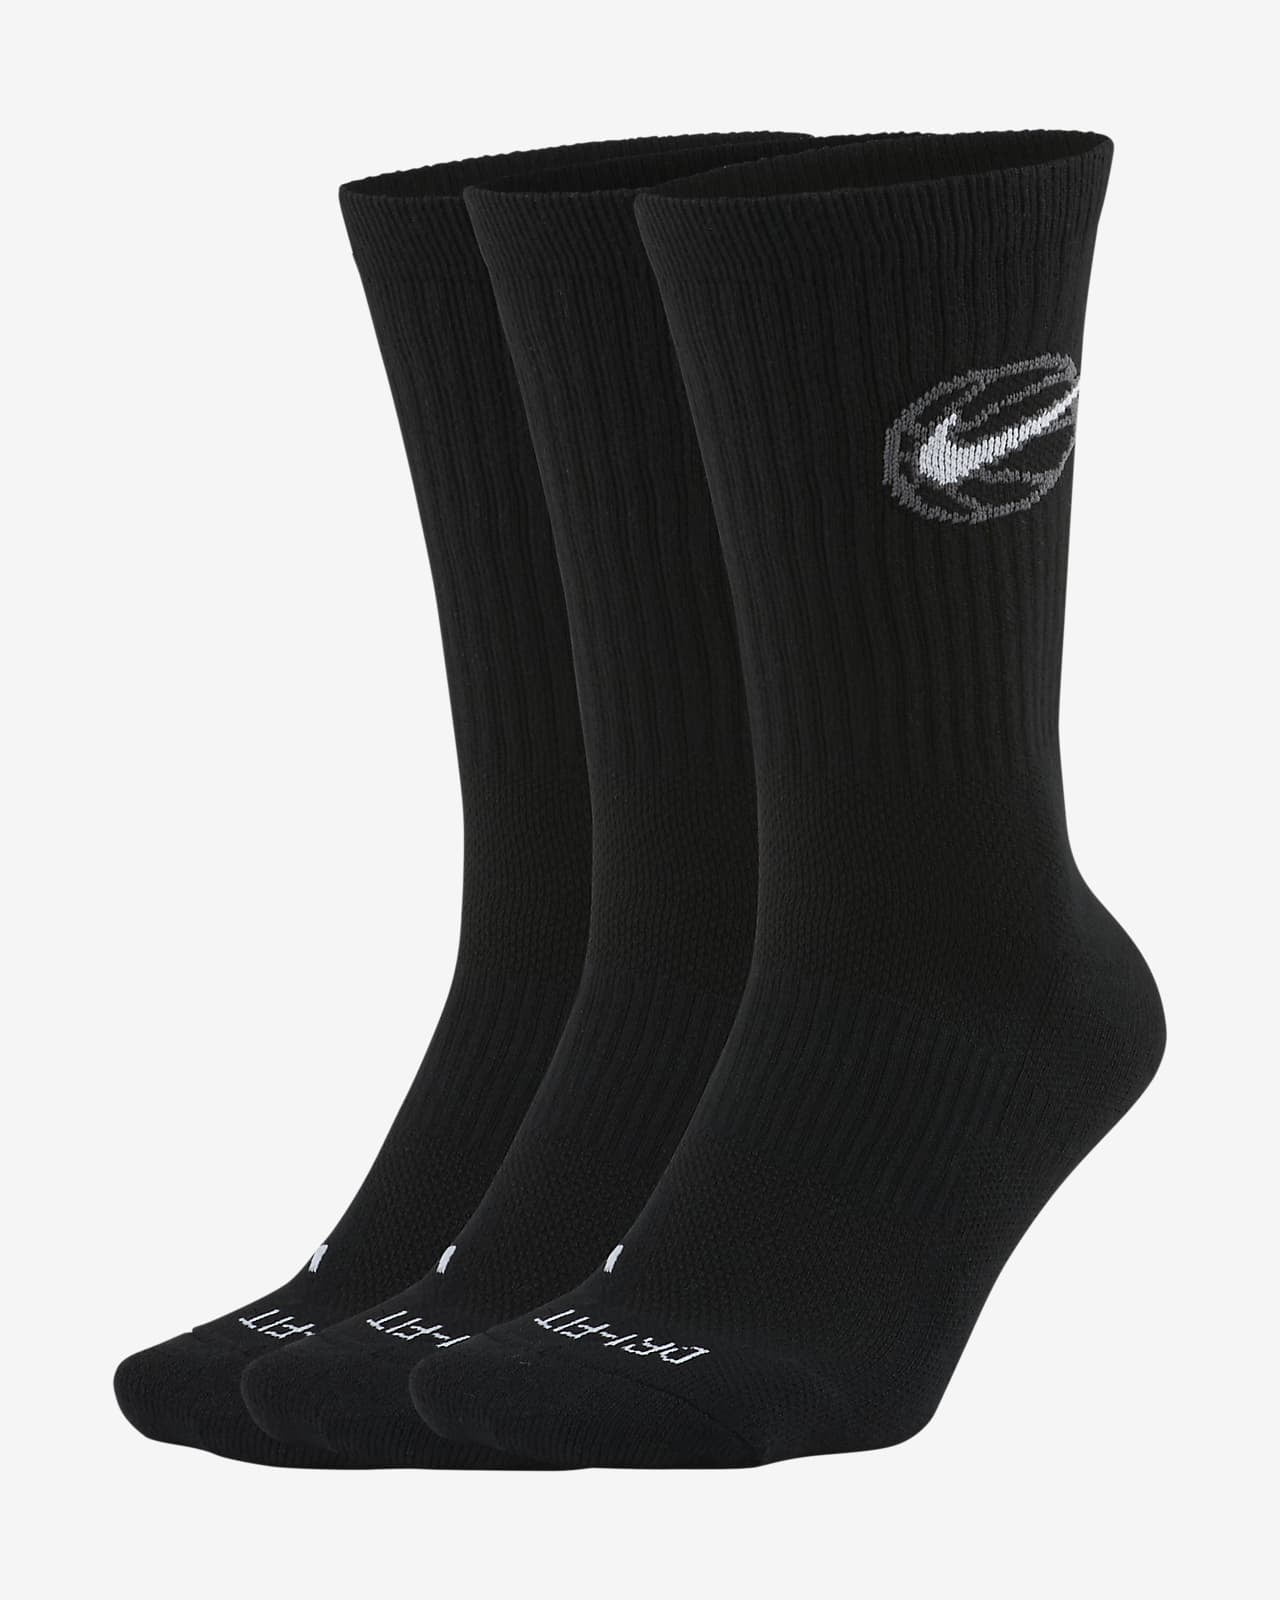 Nike Elite Everyday Dri-Fit Crew Basketball Socks - 3 Pack - Black Gray  Swoosh - DA2123 010 Sz L / 8-12 | Erstausstattungspakete